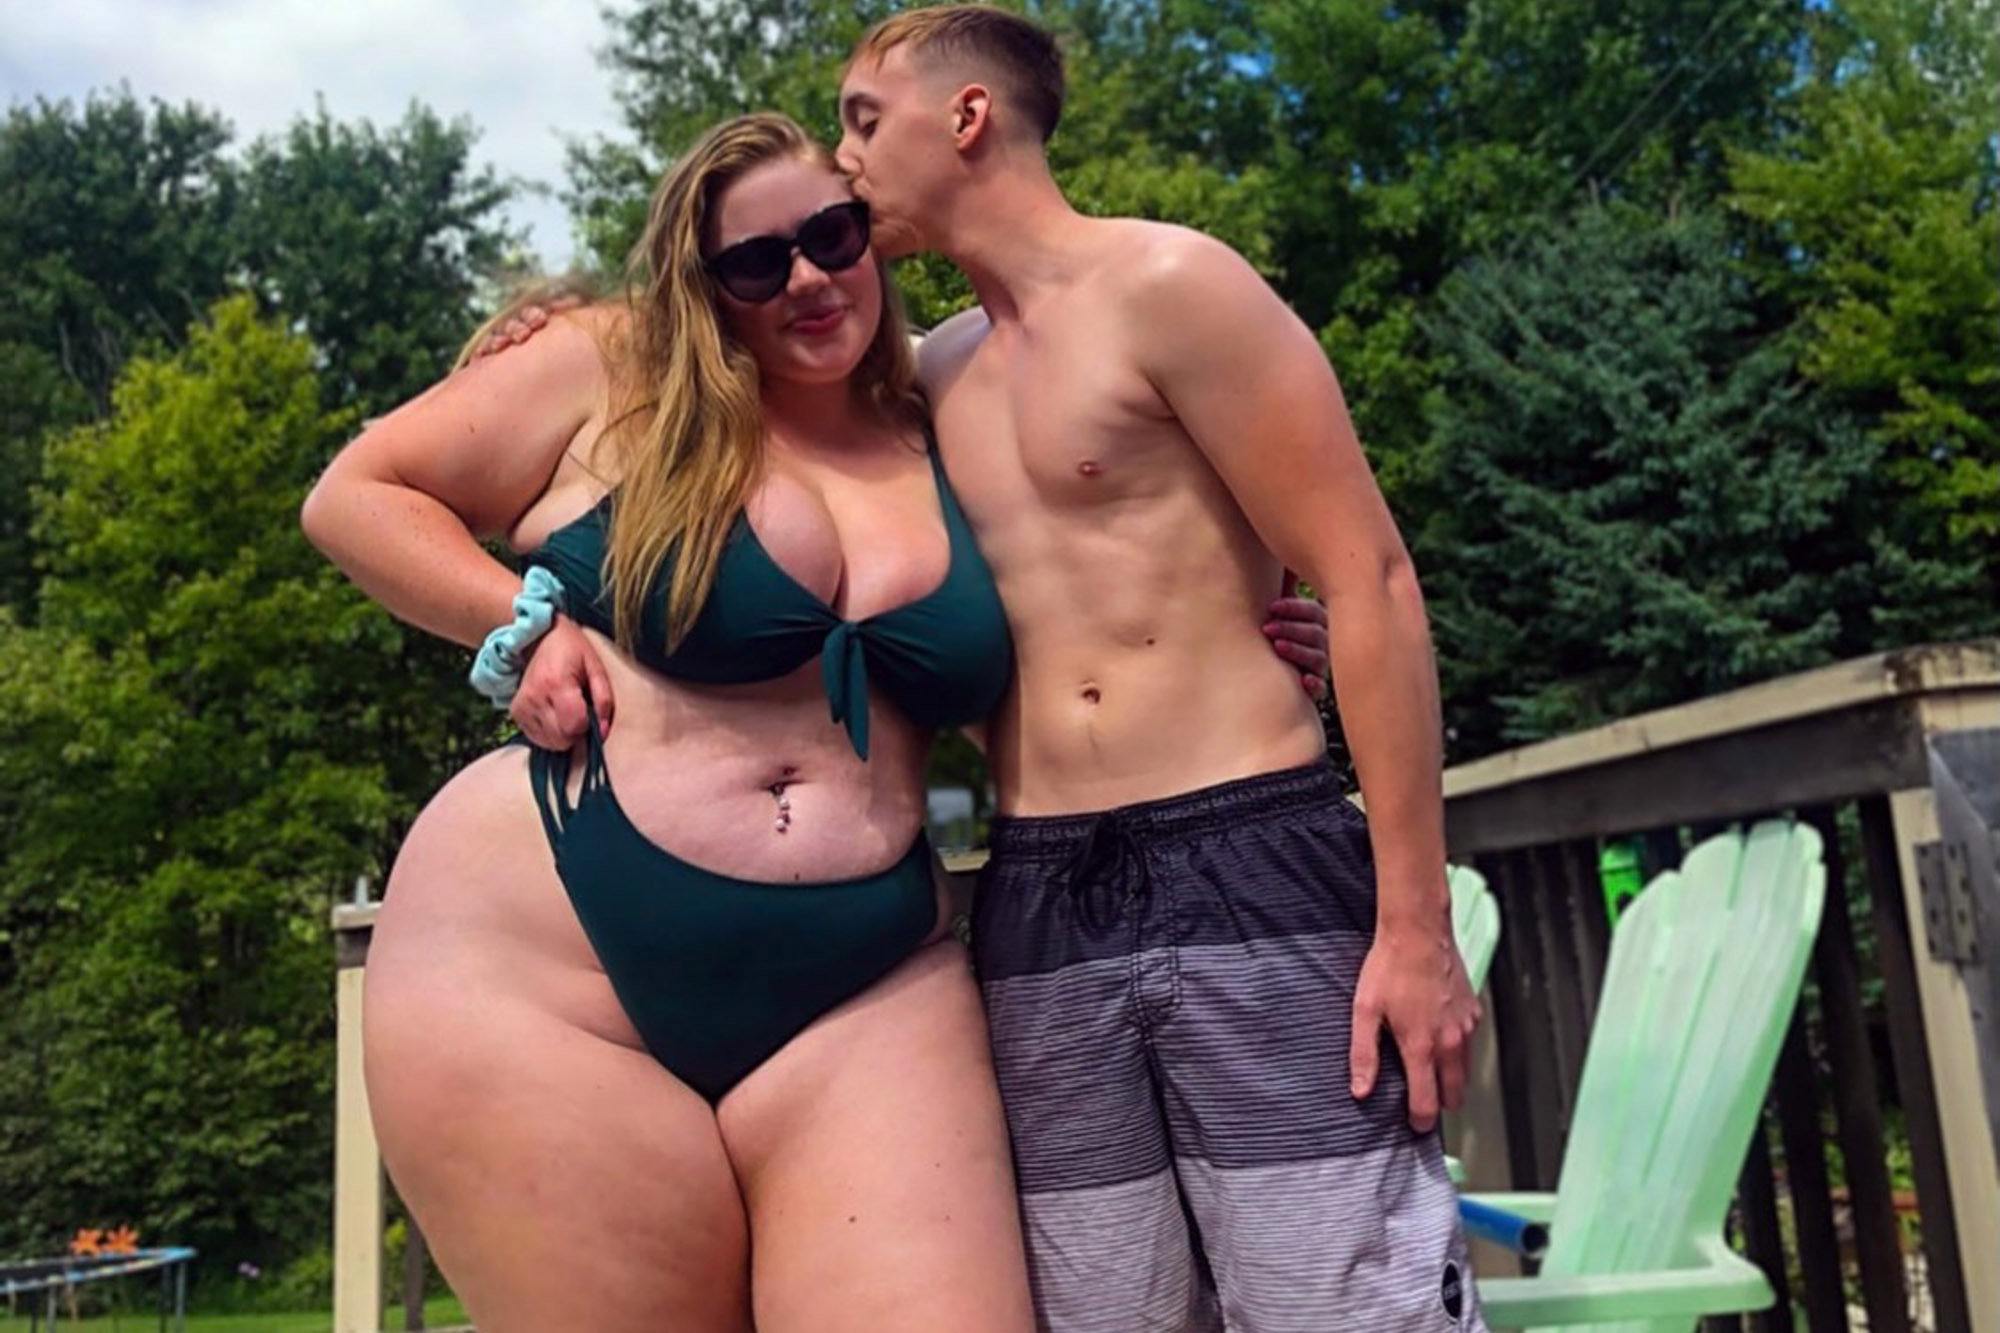 barbie bowen share fat women making love photos